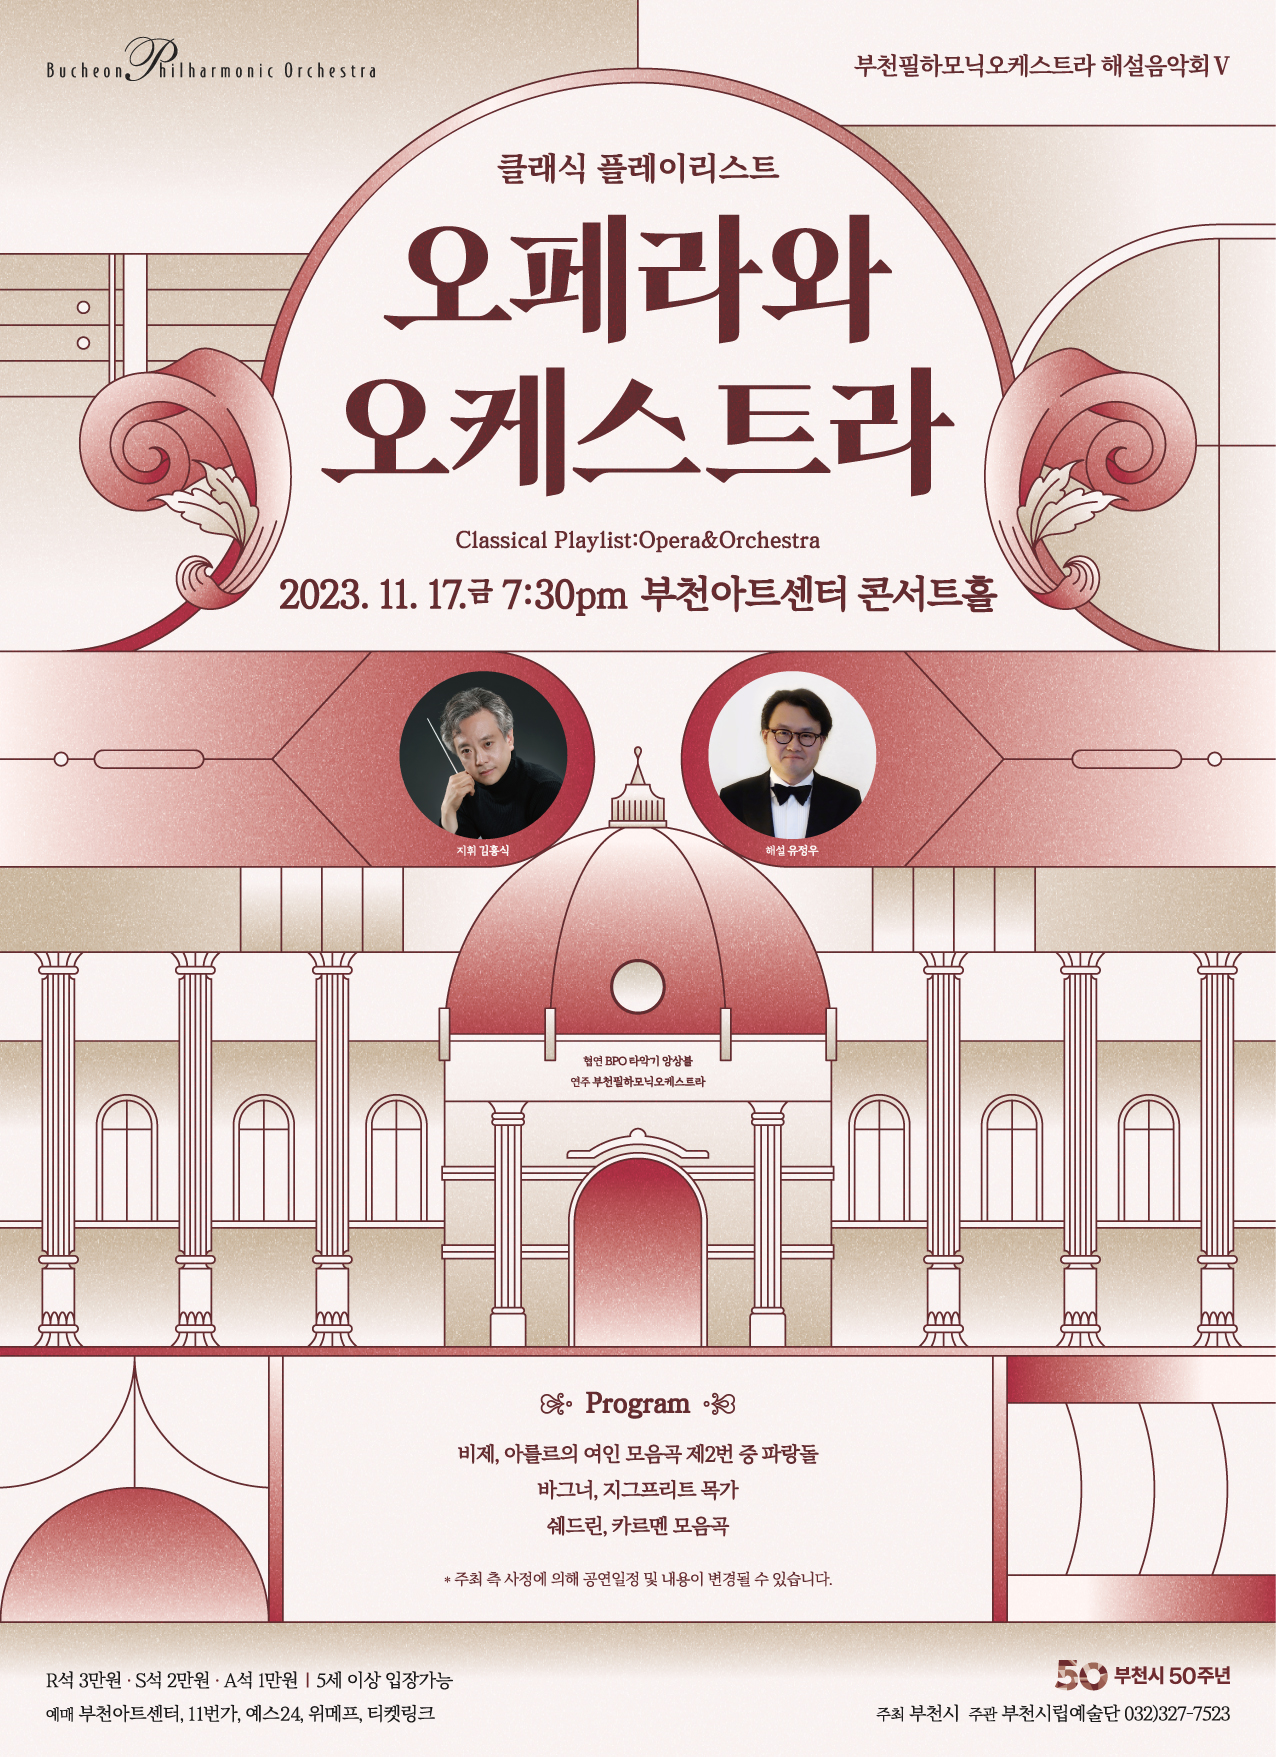 [11.17]Bucheon Philharmonic Orchestra Lecture ConcertⅤ